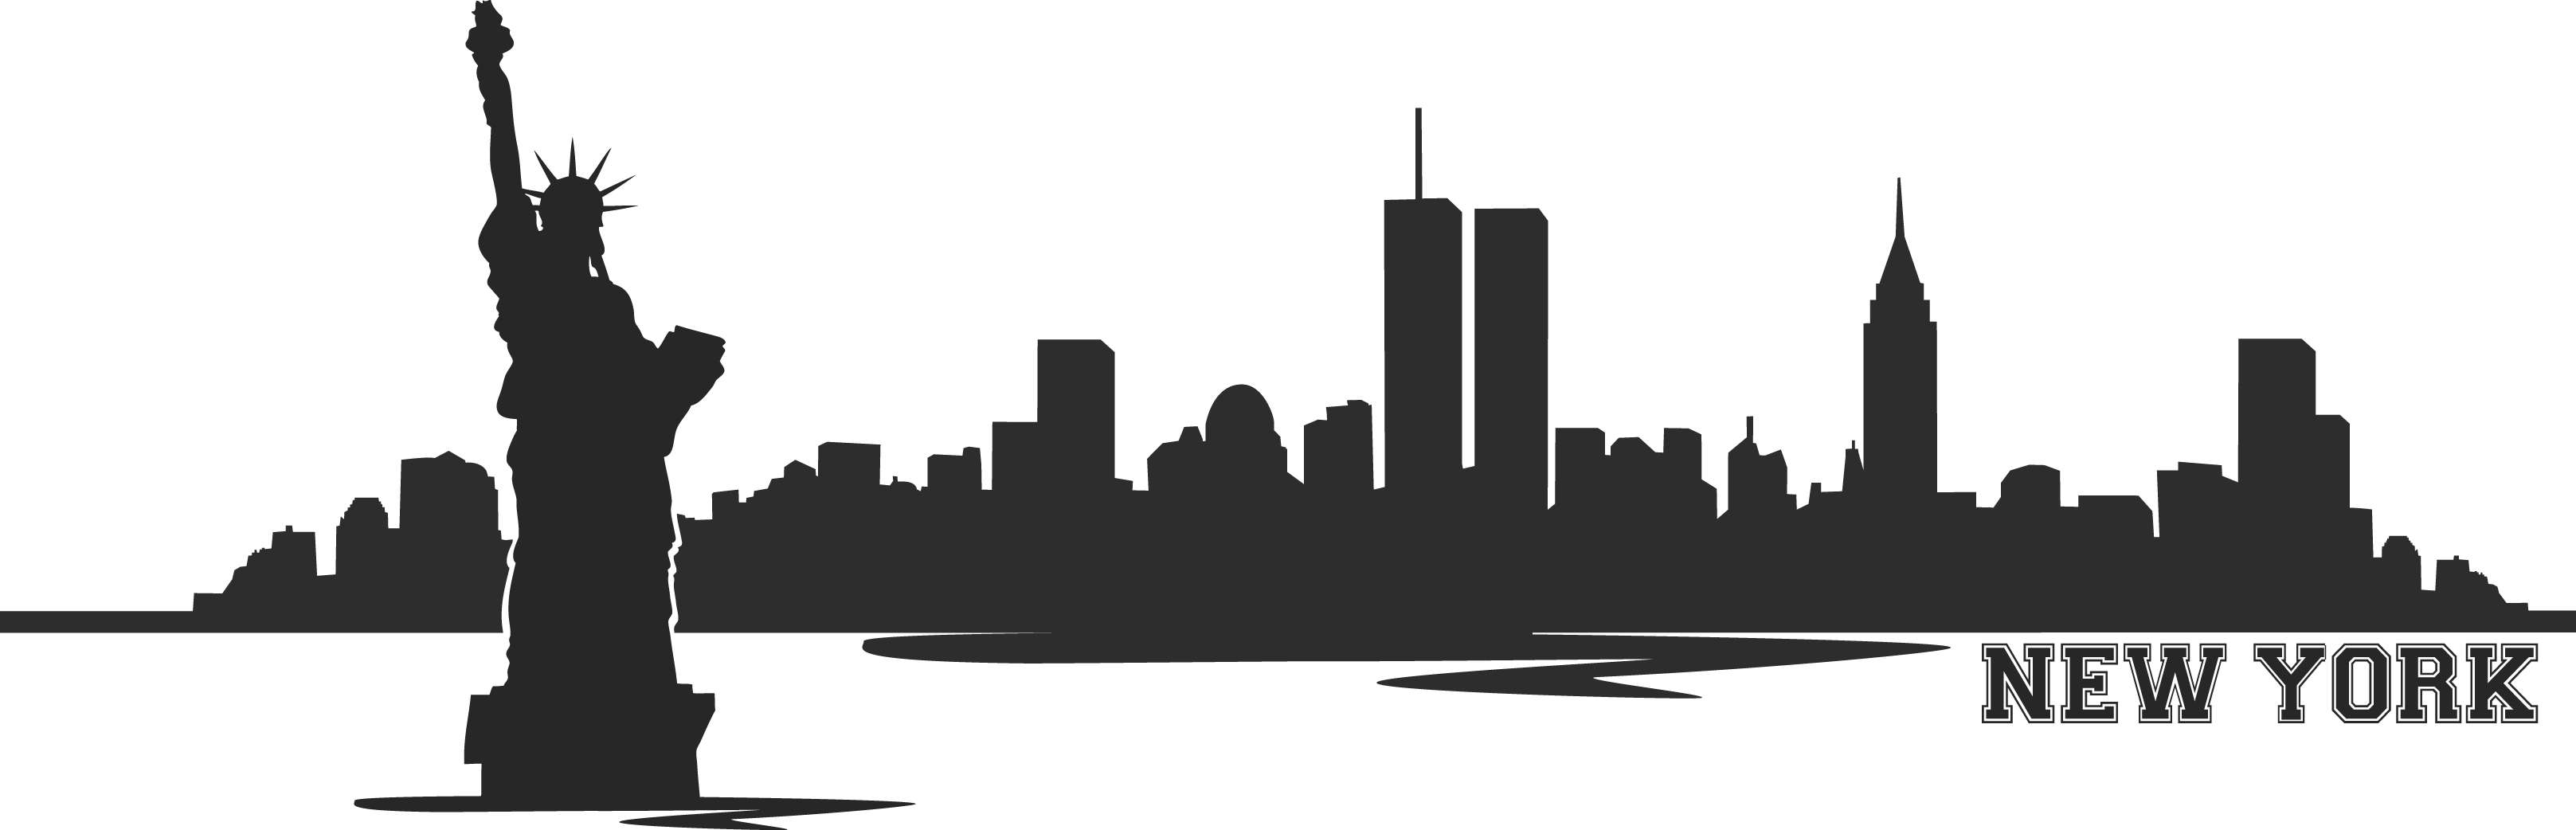 clip art of new york city skyline - photo #27